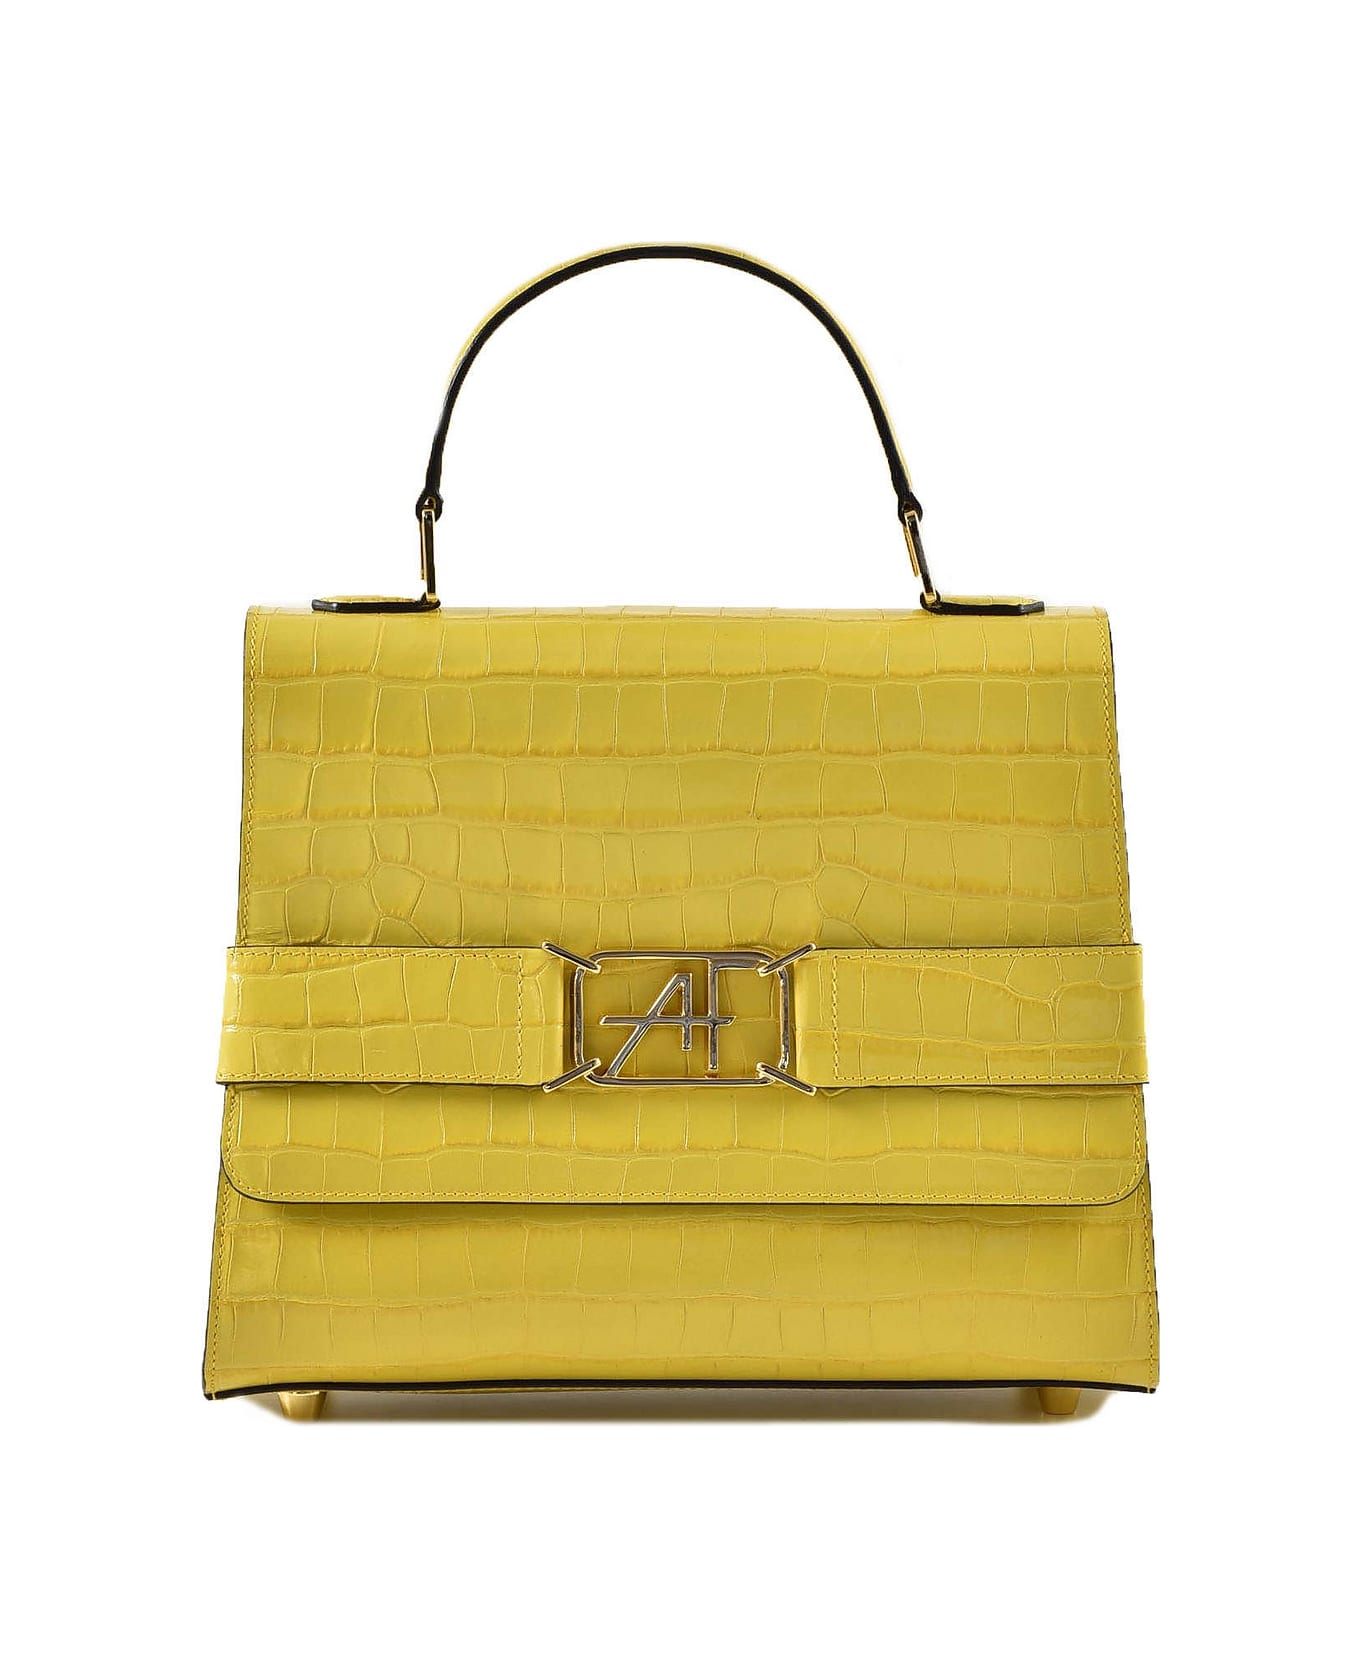 Womens Bags Tote bags Save 32% Alberta Ferretti Synthetic S Handbag in Yellow 